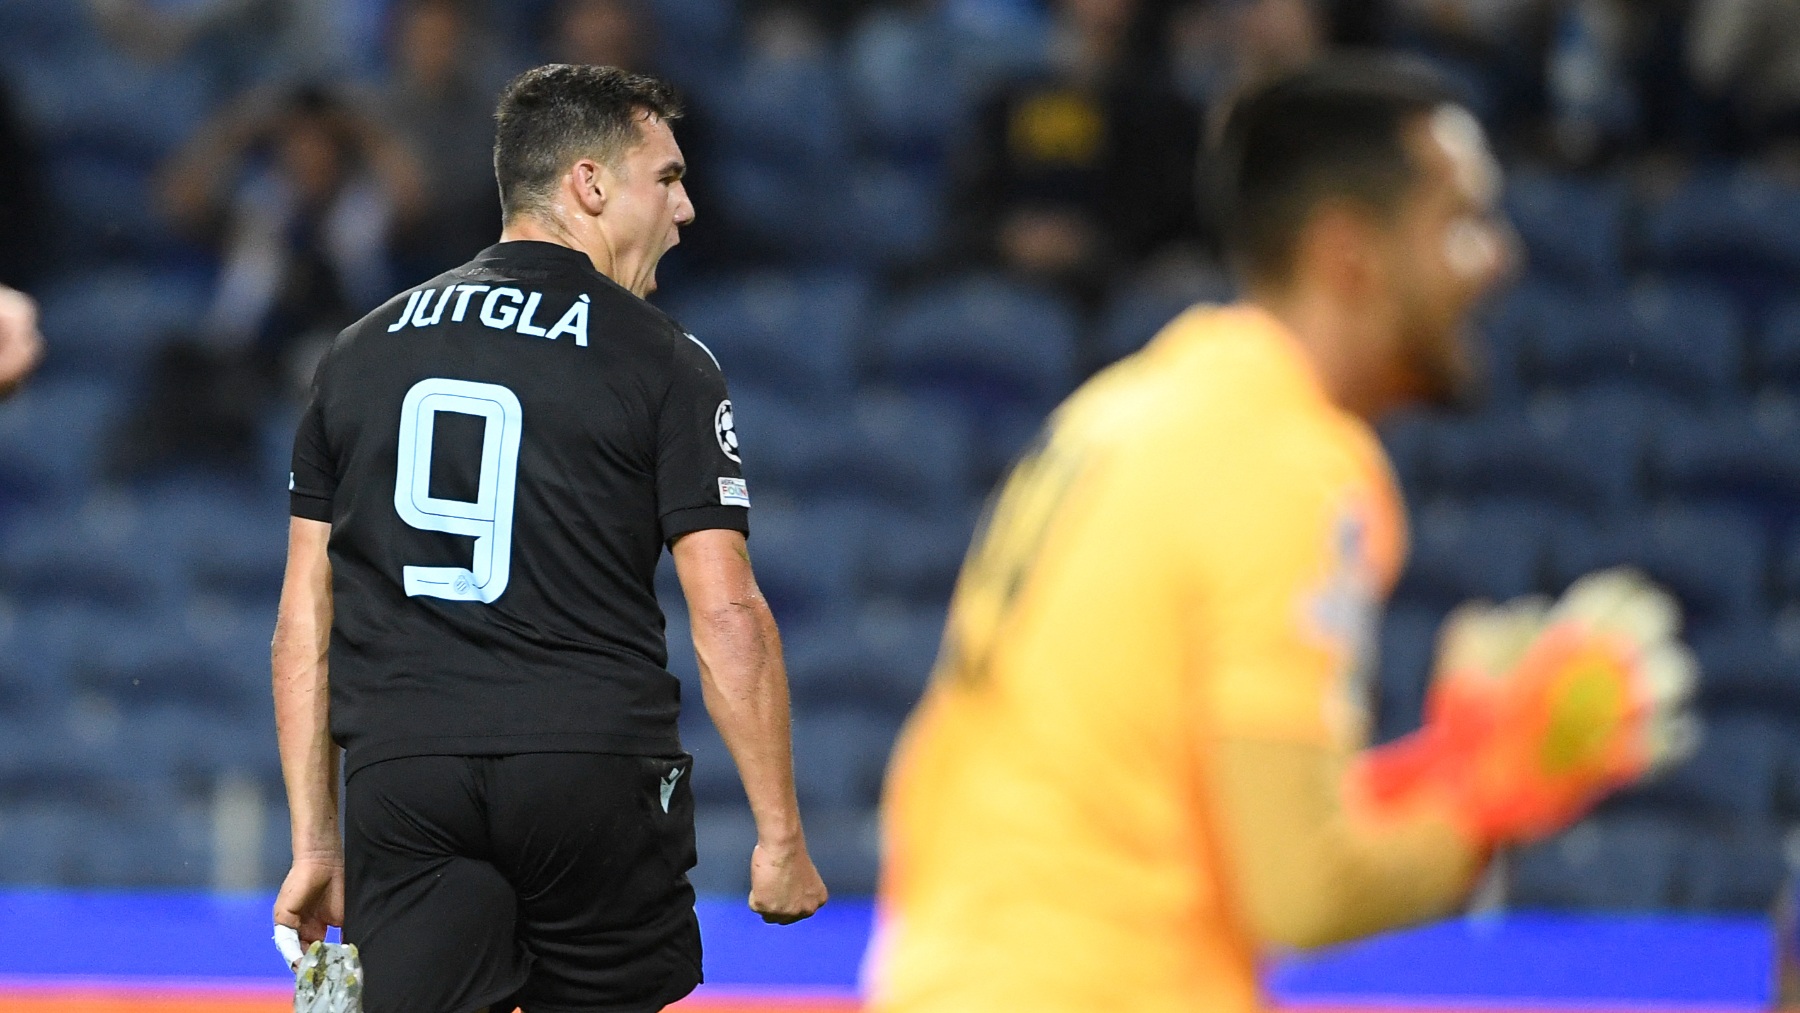 Jutglá celebra su gol en Oporto. (AFP)